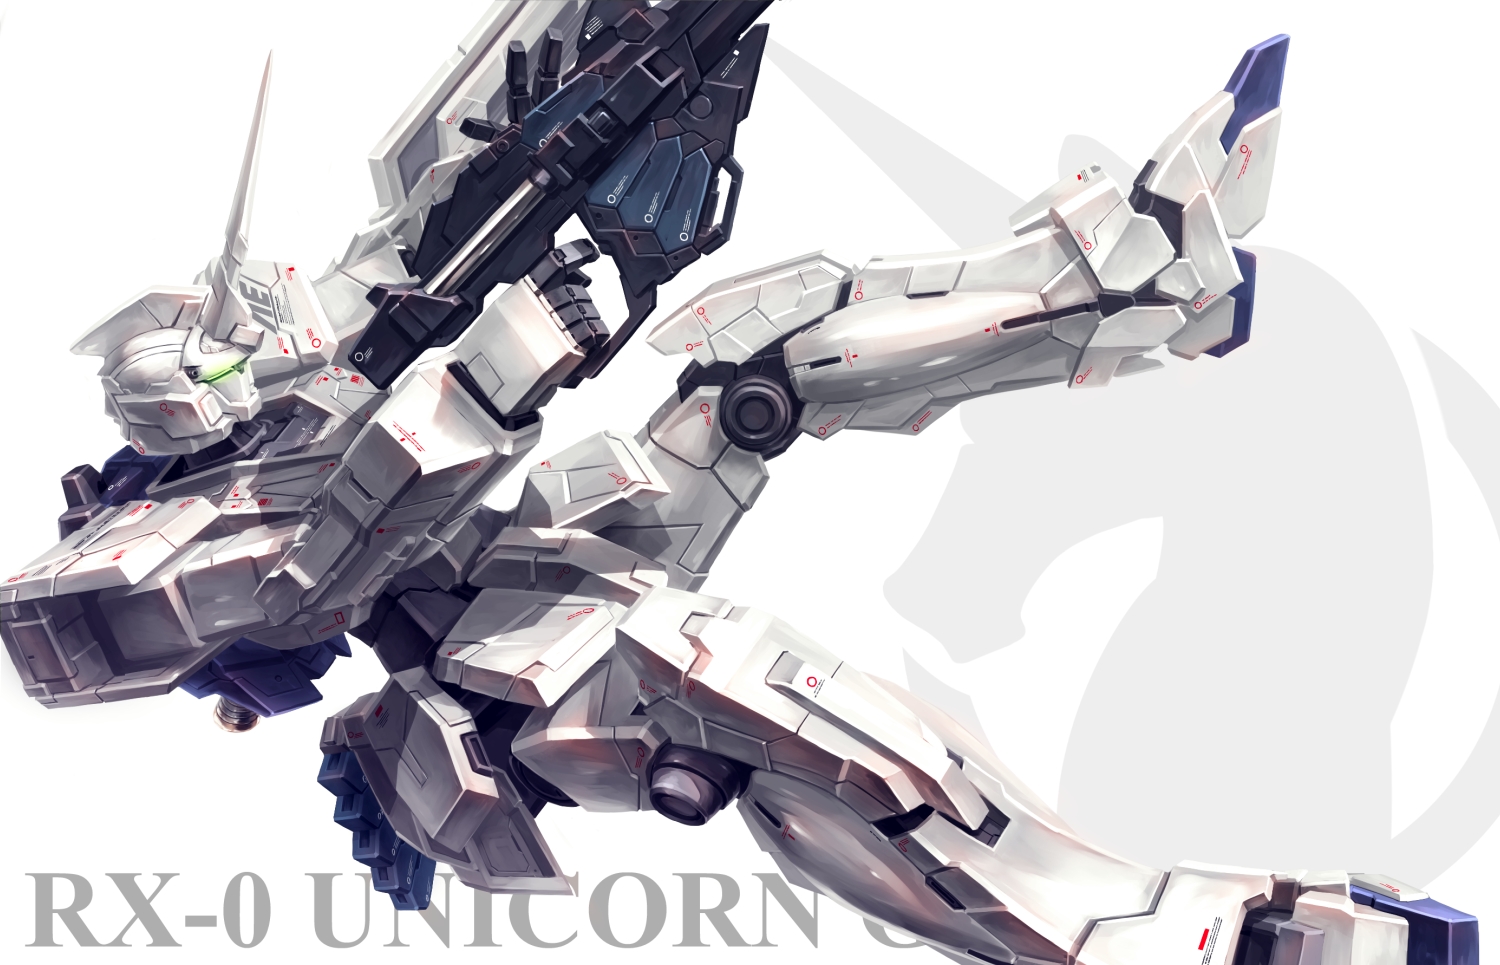 Daizo Mobile Suit Gundam Mobile Suit Gundam Unicorn Rx 0 Unicorn Gundam Mecha Wallpapers Hd Desktop And Mobile Backgrounds